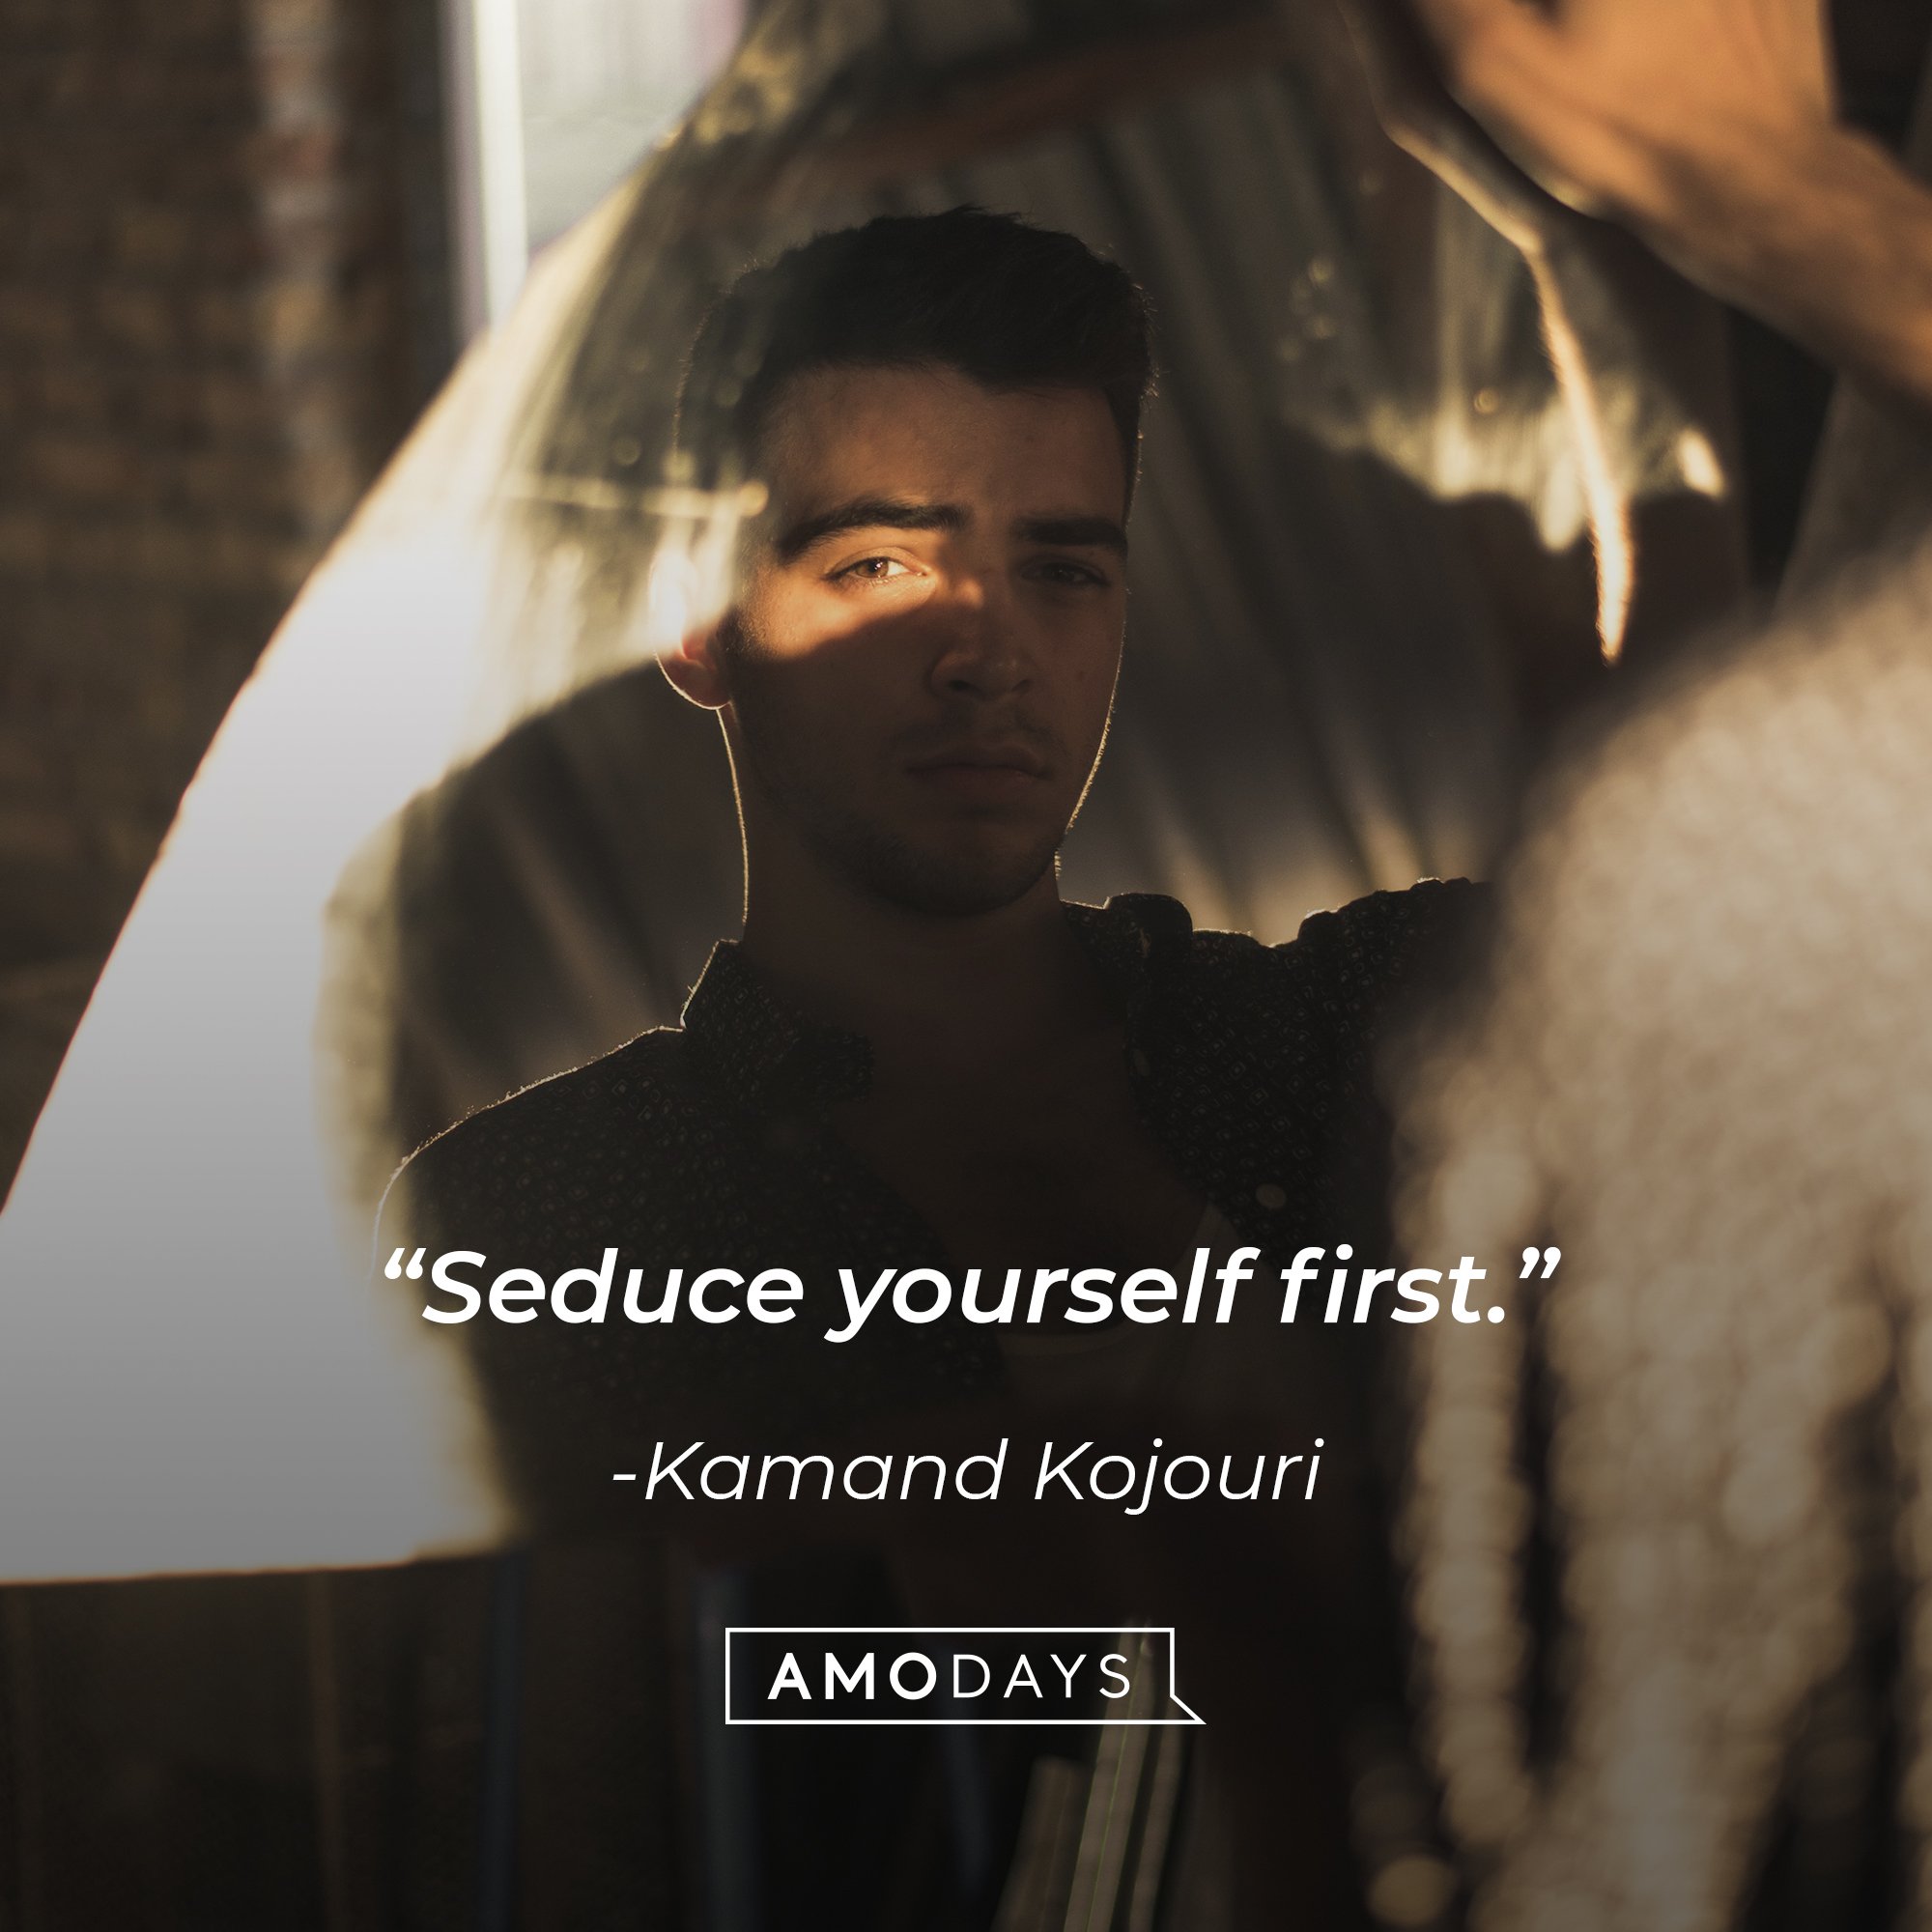 Kamand Kojouri’s quote: "Seduce yourself first." | Image: AmoDays